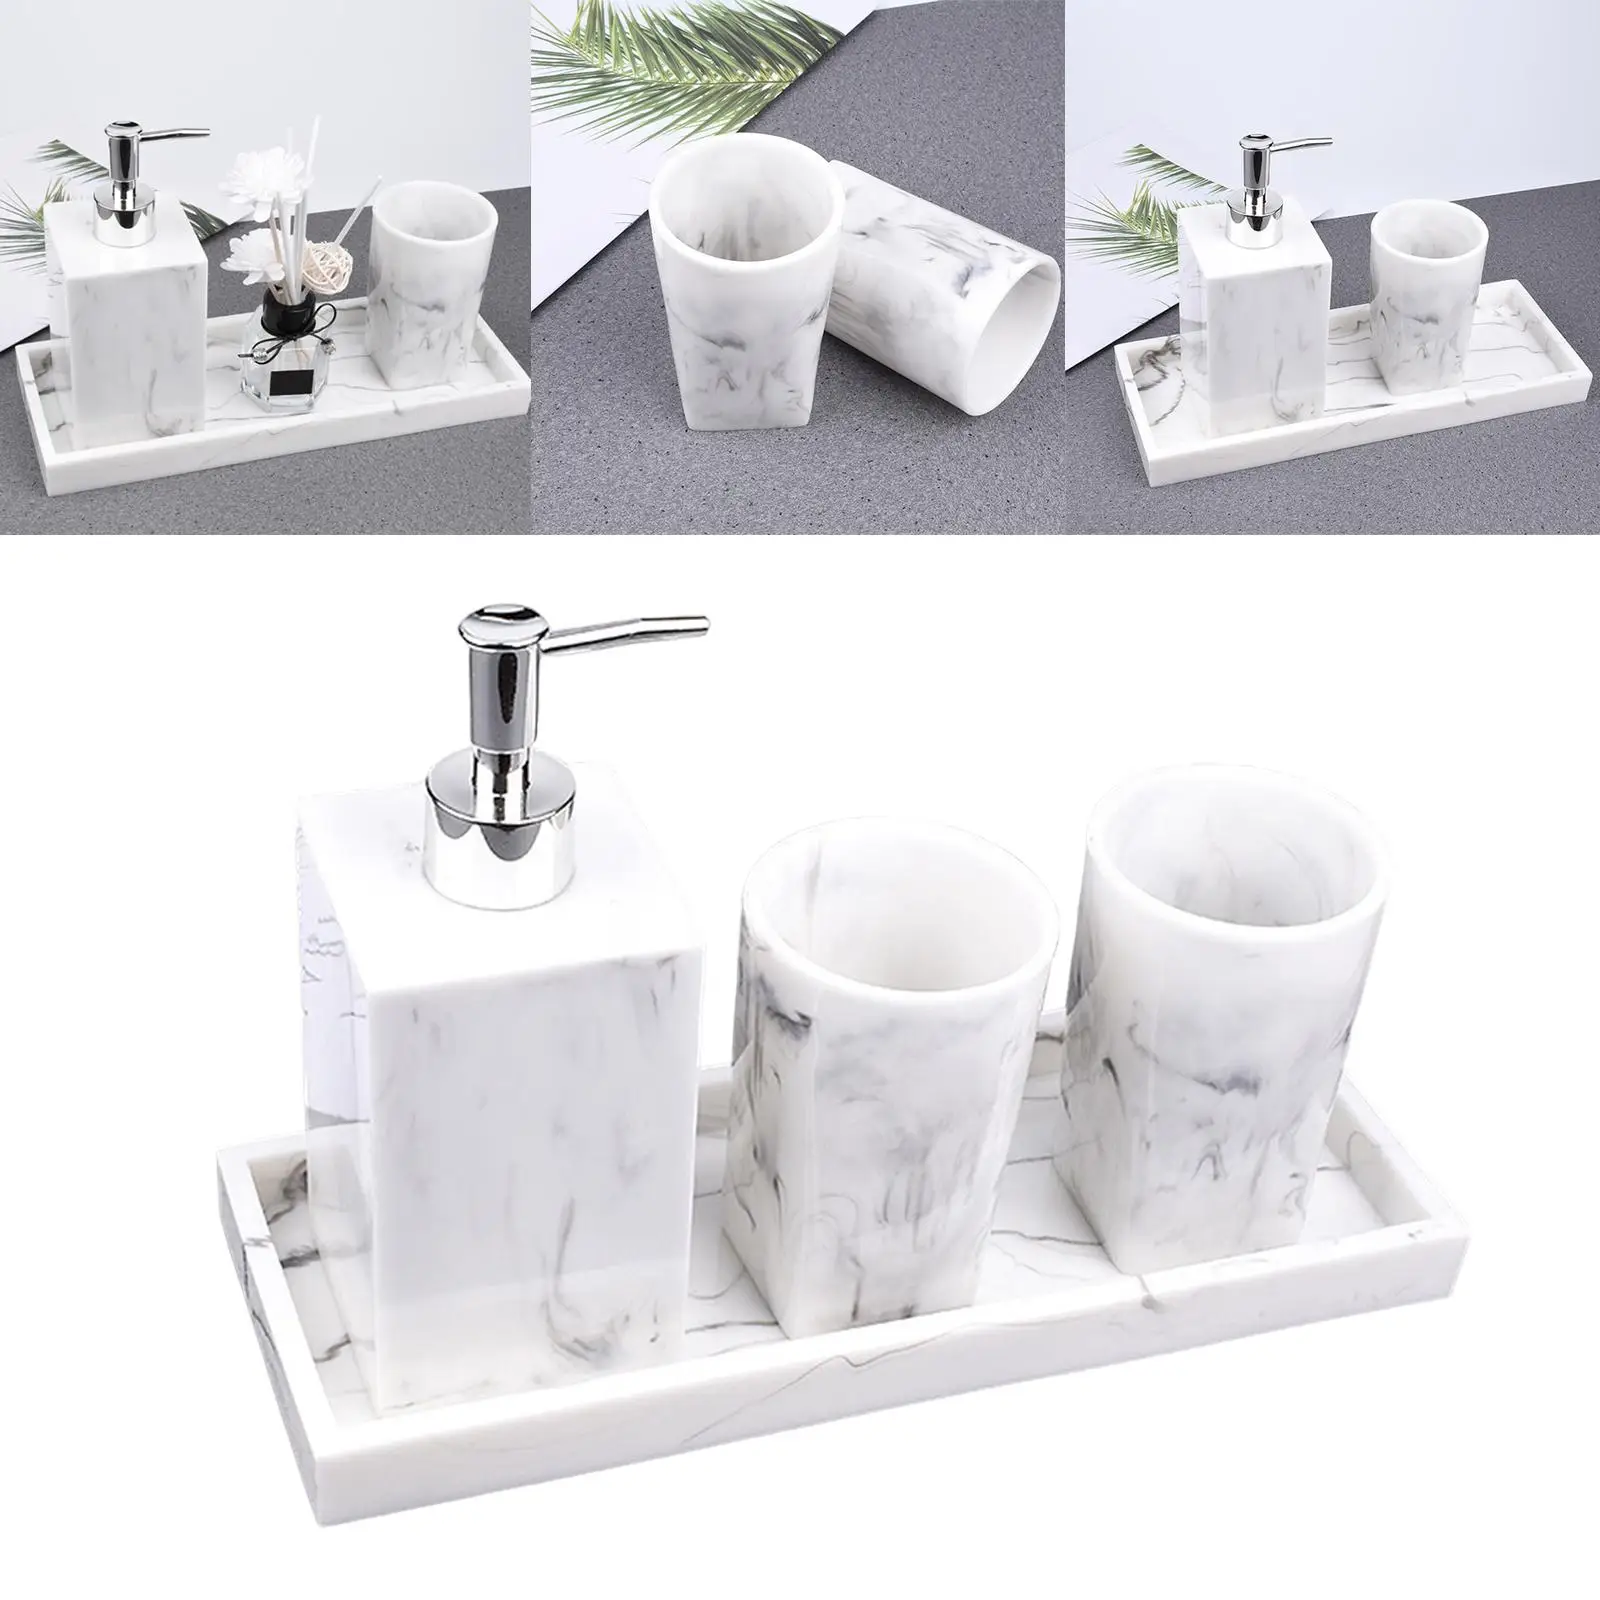 Bathroom Accessories Set  Dispenser Tray Modern Essential Set for Bathroom Counter Dorm Decoration Easy Clean Practical